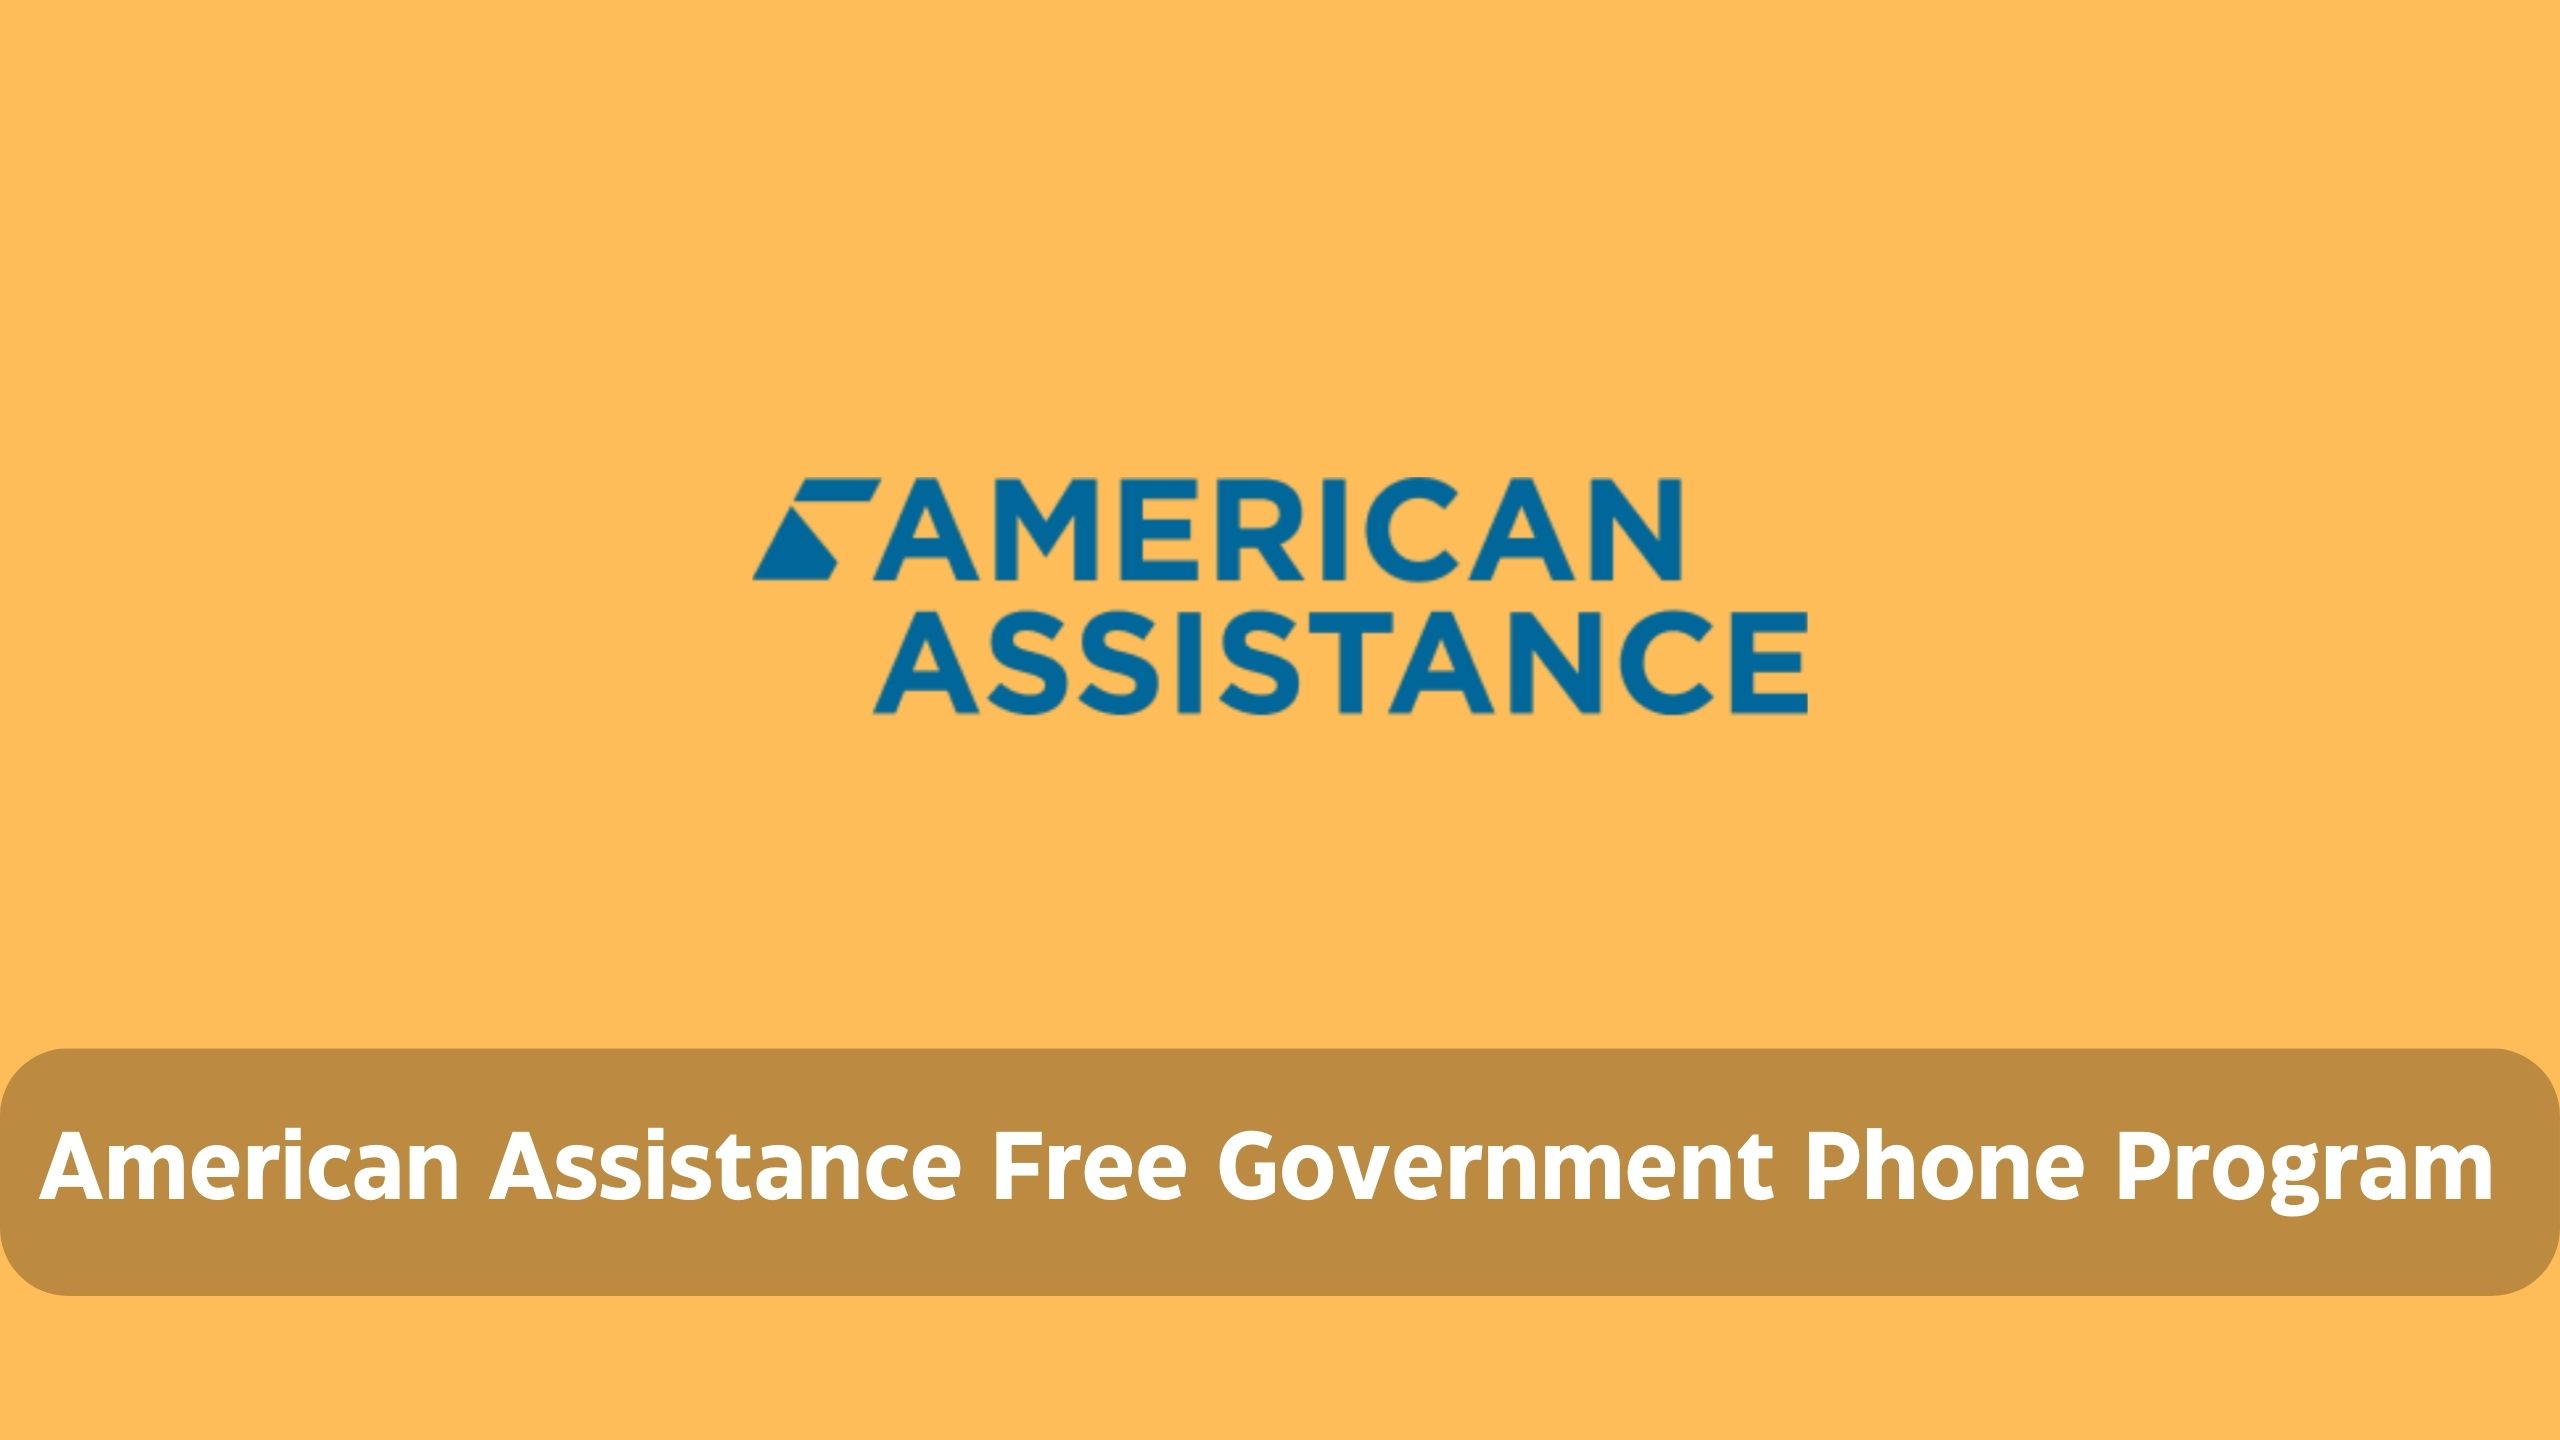 American Assistance Free Government Phone Program | Lifeline, ACP Plans, Eligibilty & Application